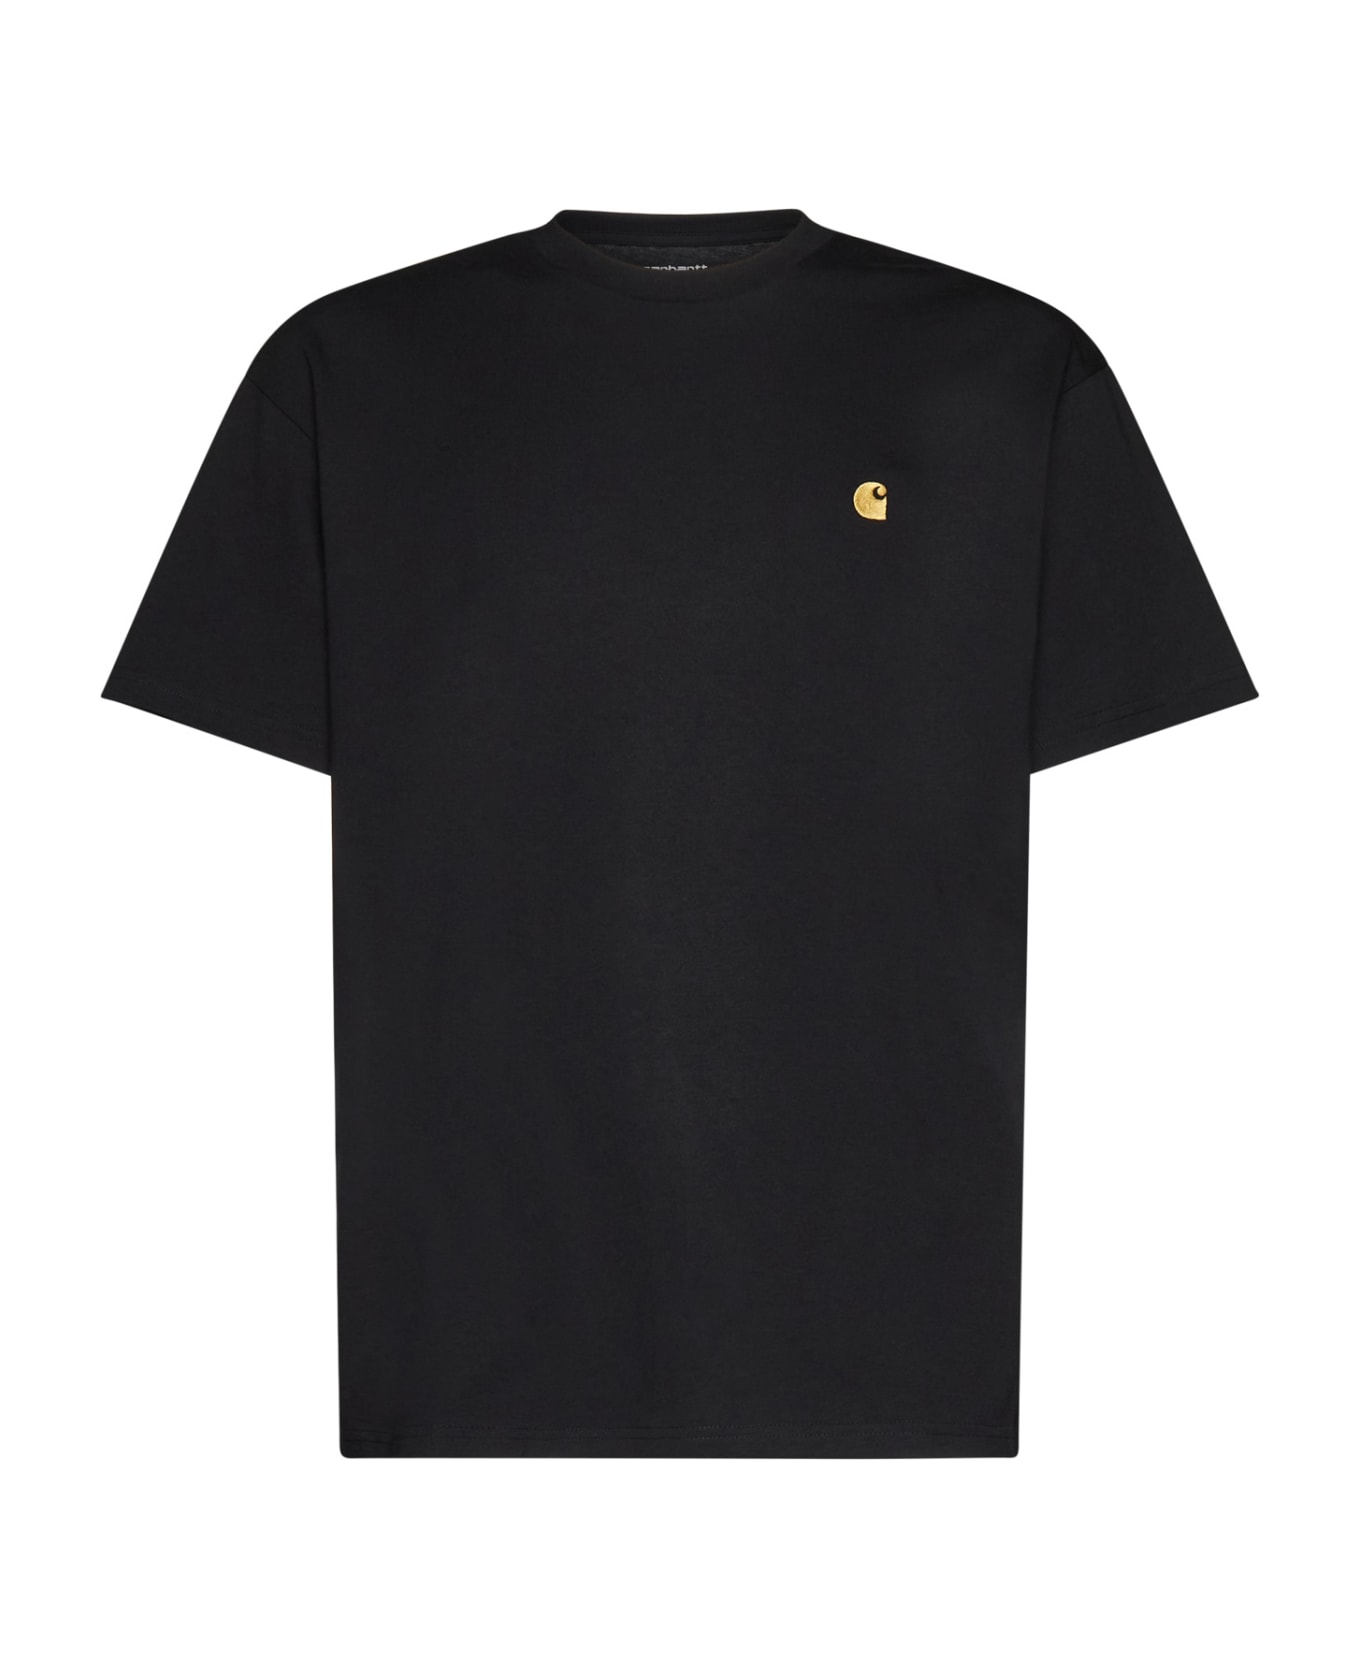 Carhartt T-Shirt - Black